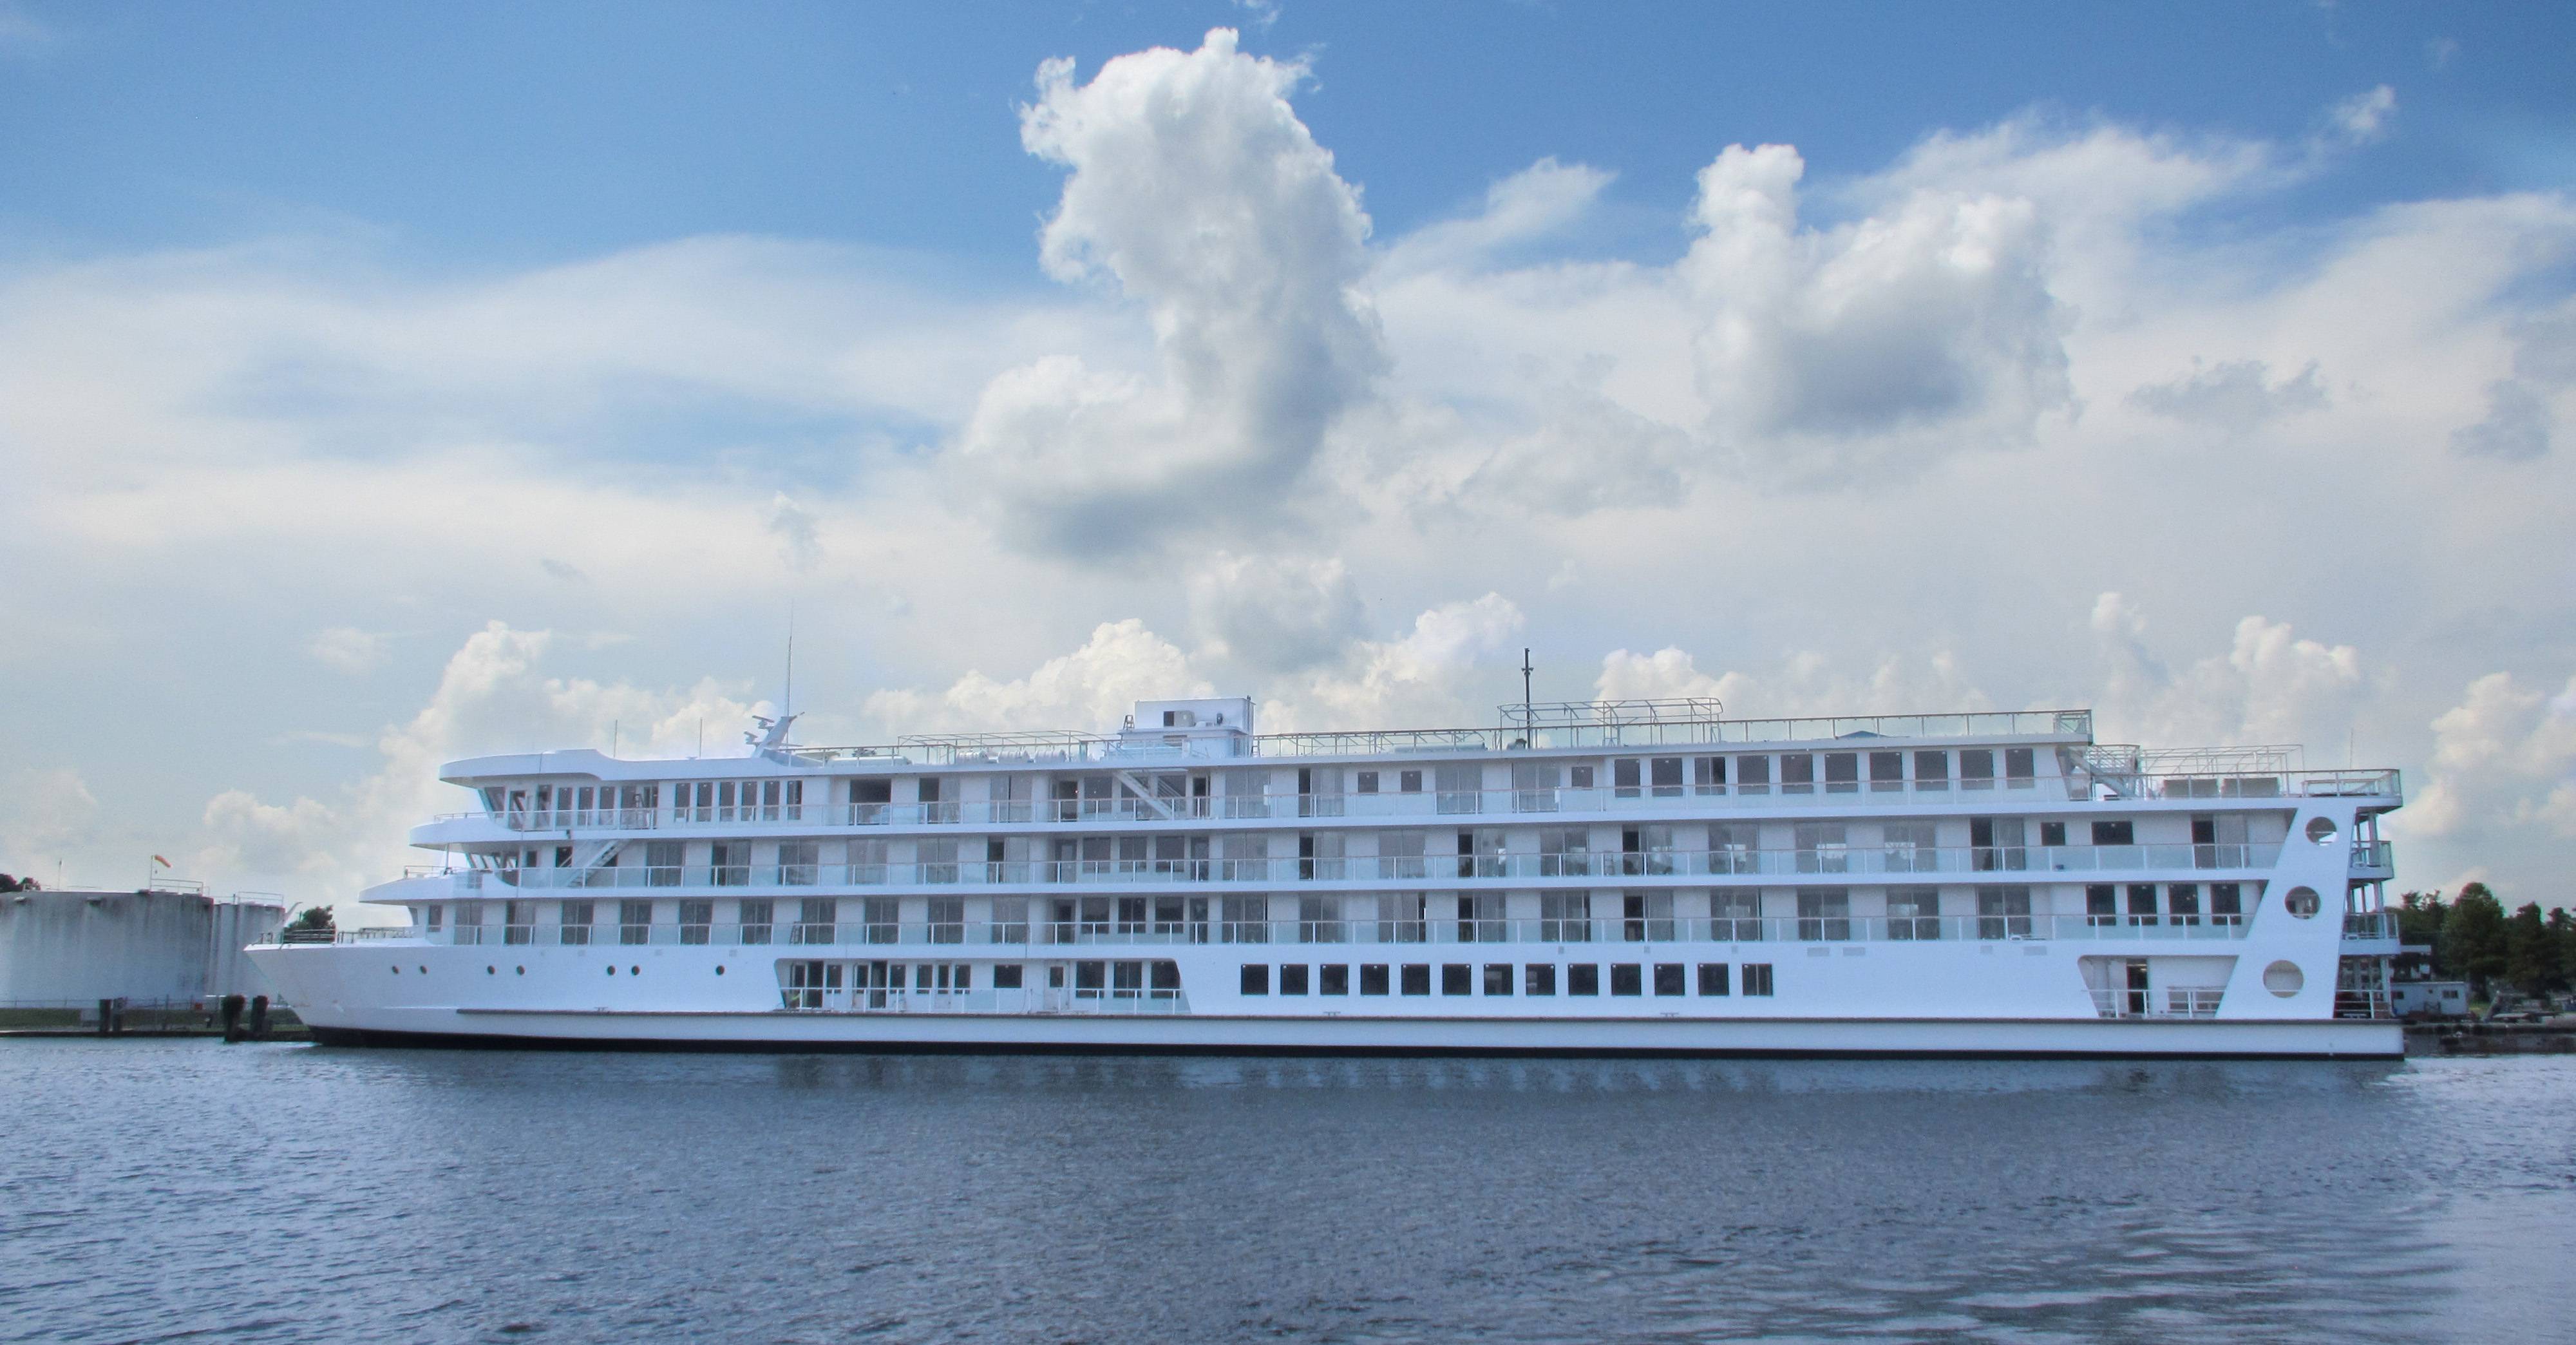 american song cruise ship columbia river